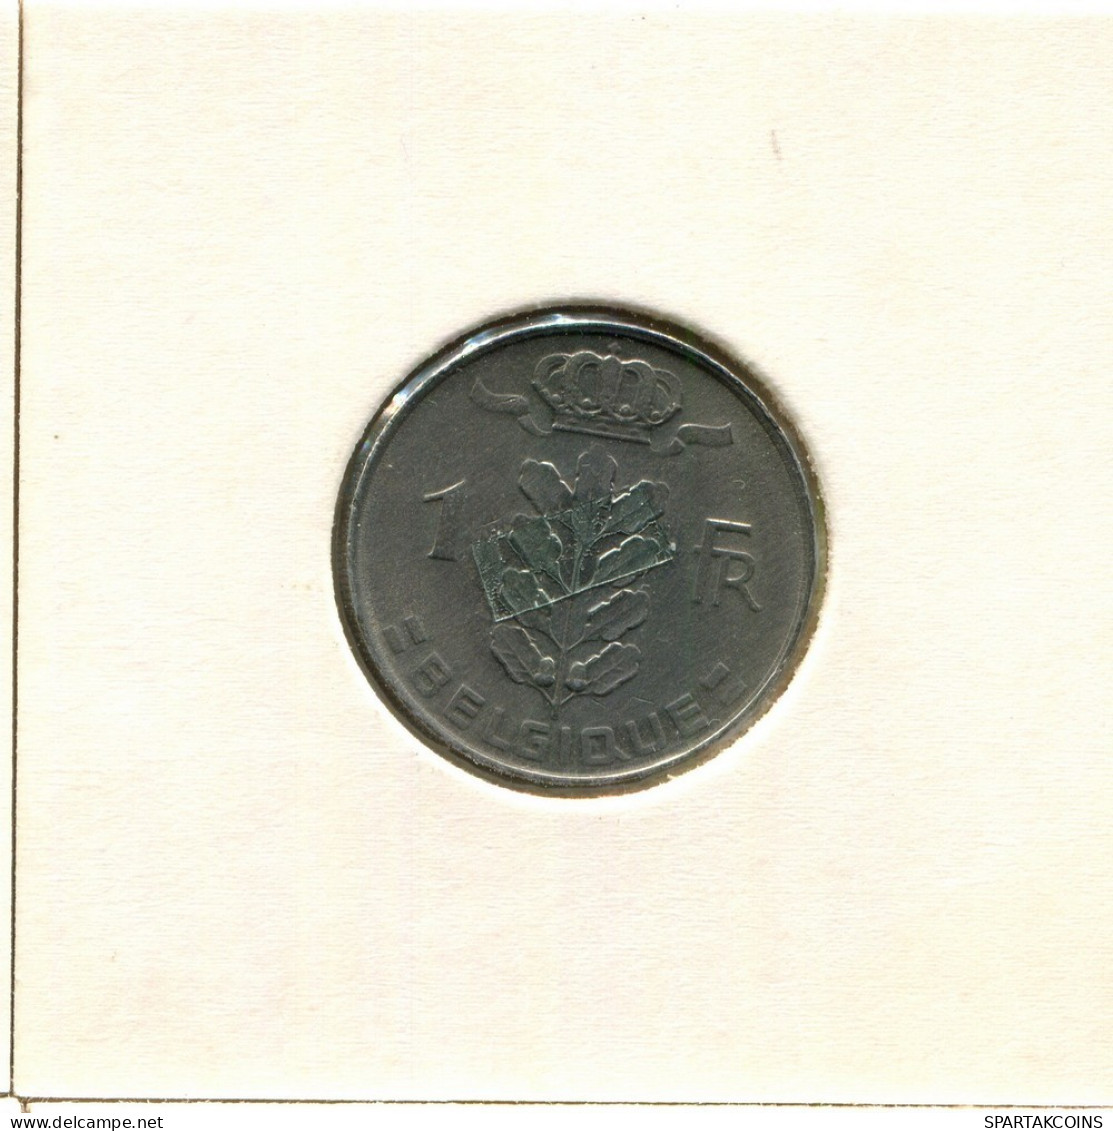 1 FRANC 1976 FRENCH Text BELGIUM Coin #BB313.U.A - 1 Franc